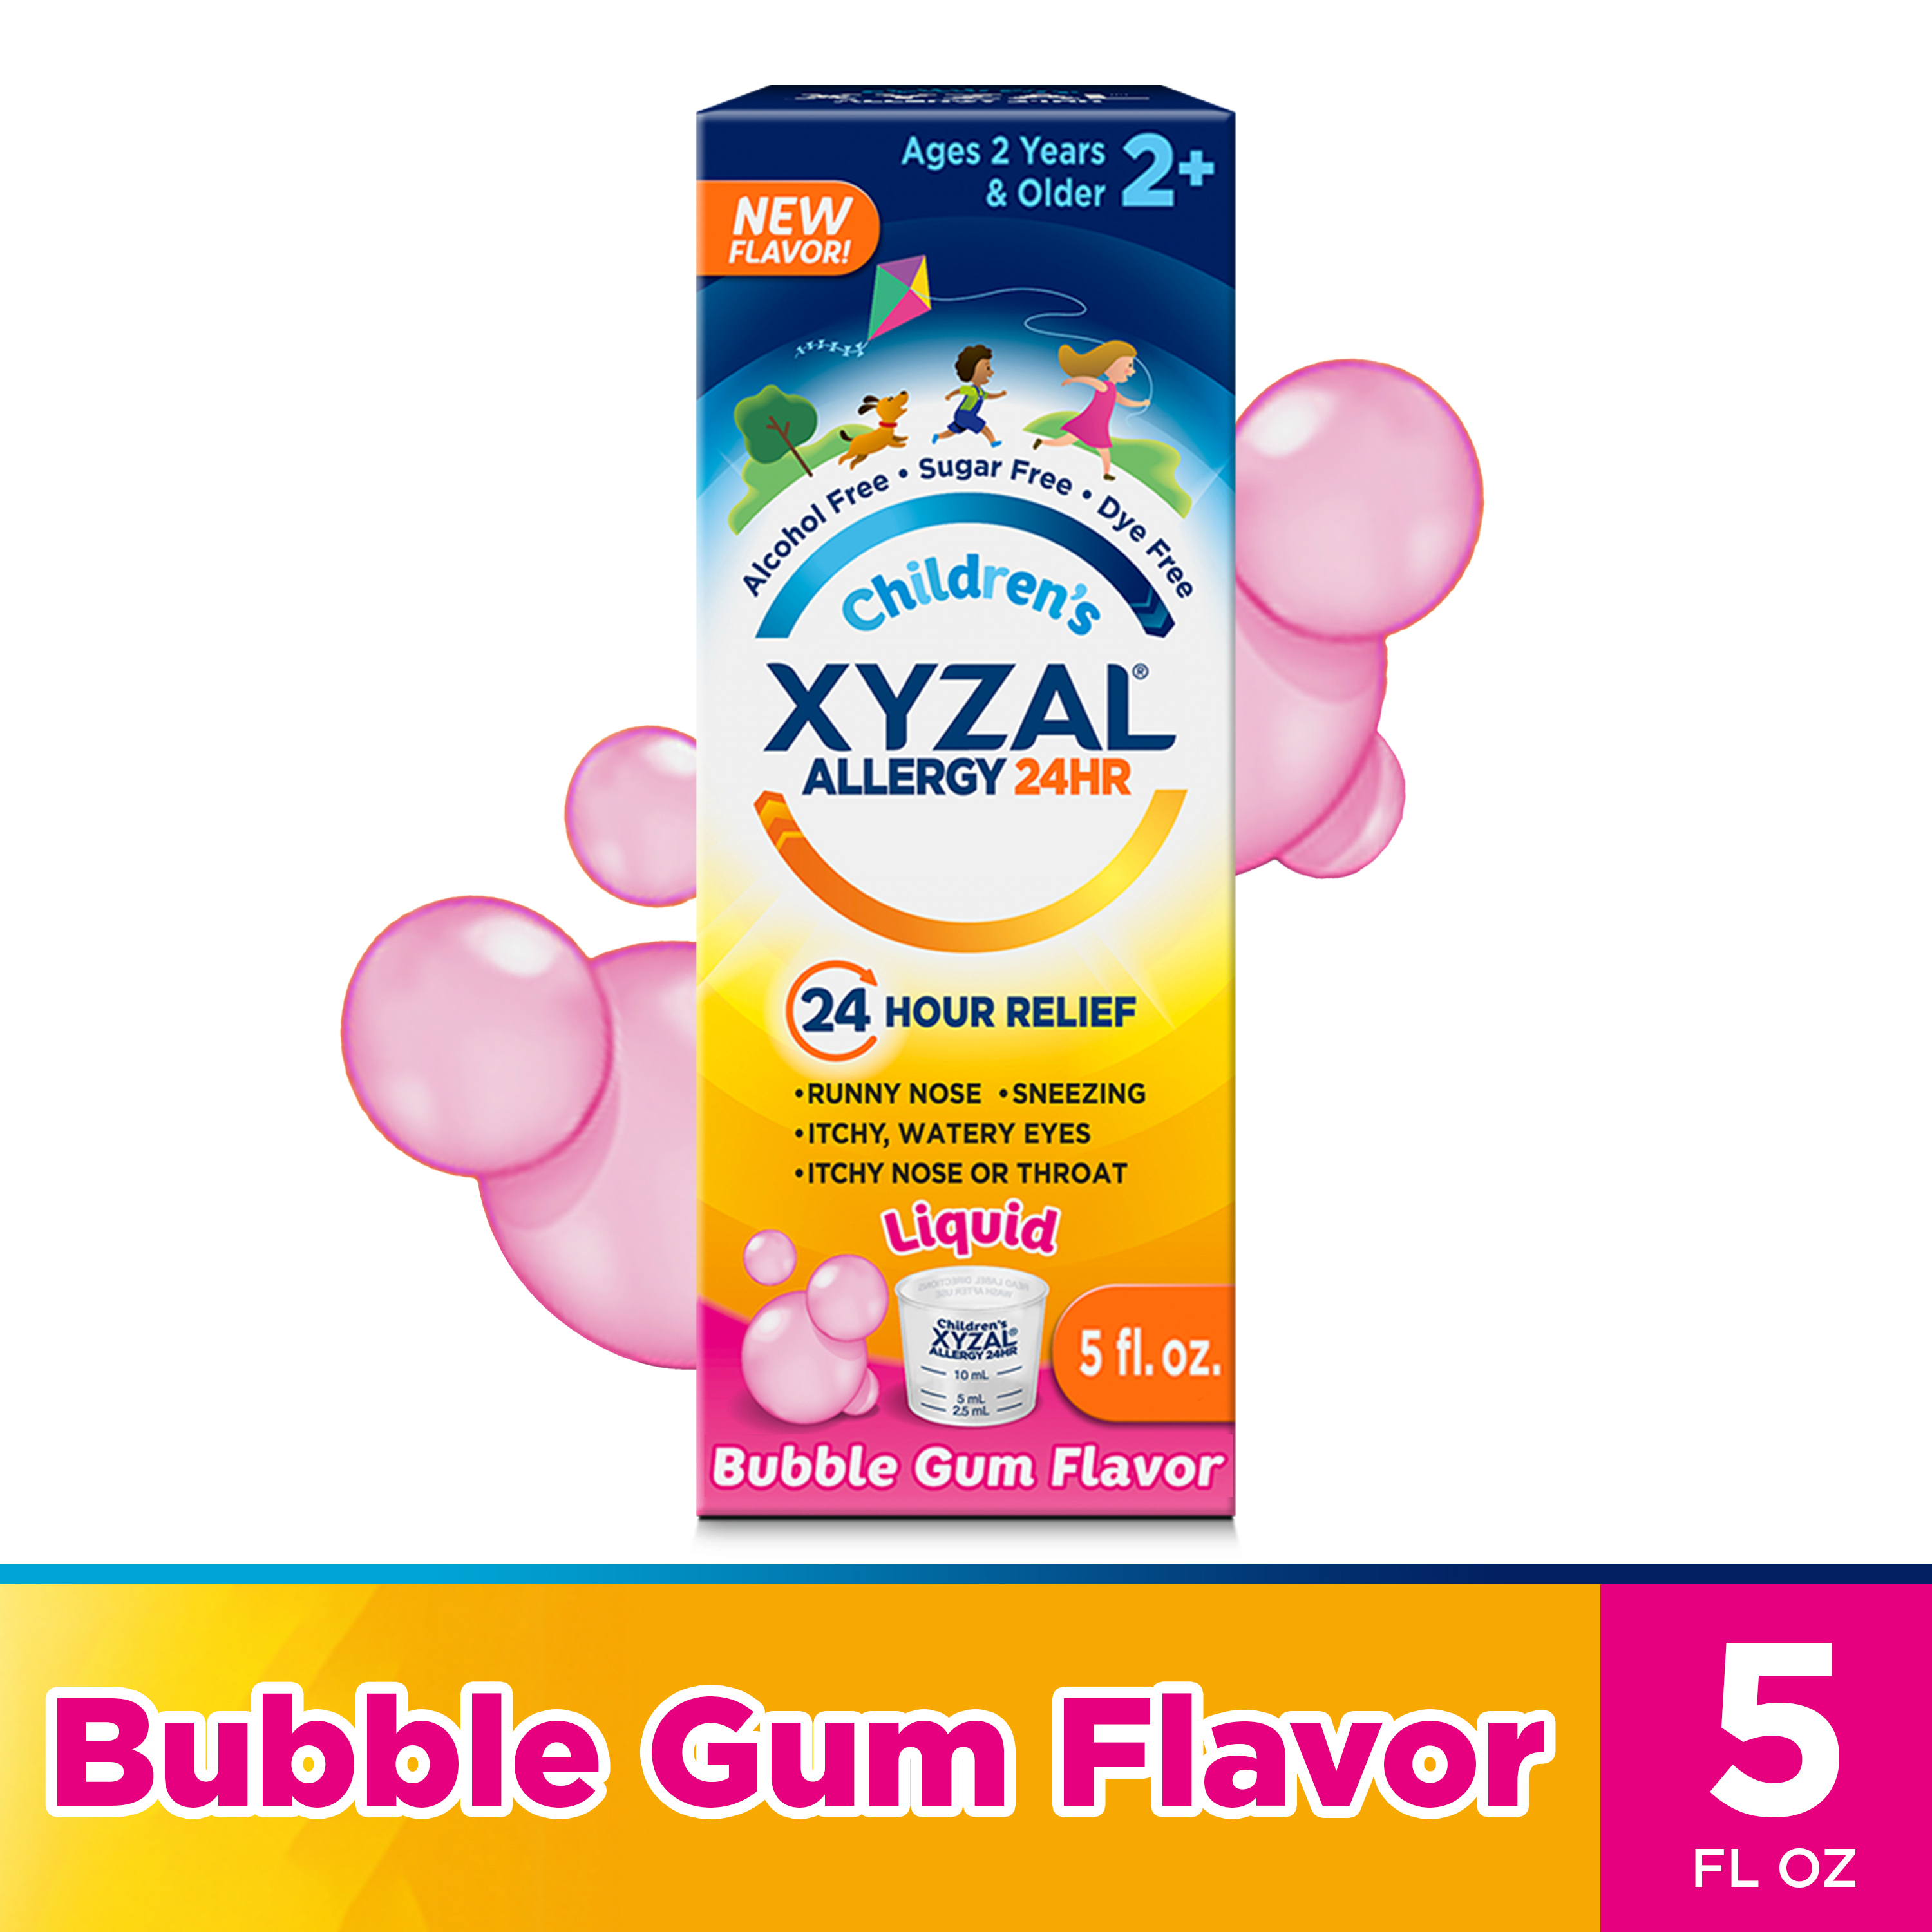 Xyzal 24 Hour Children's Antihistamine Medicine for Kids Allergy Relief, 2.5 mg Levocetirizine, Bubble Gum Flavor, 5 fl oz - image 1 of 11